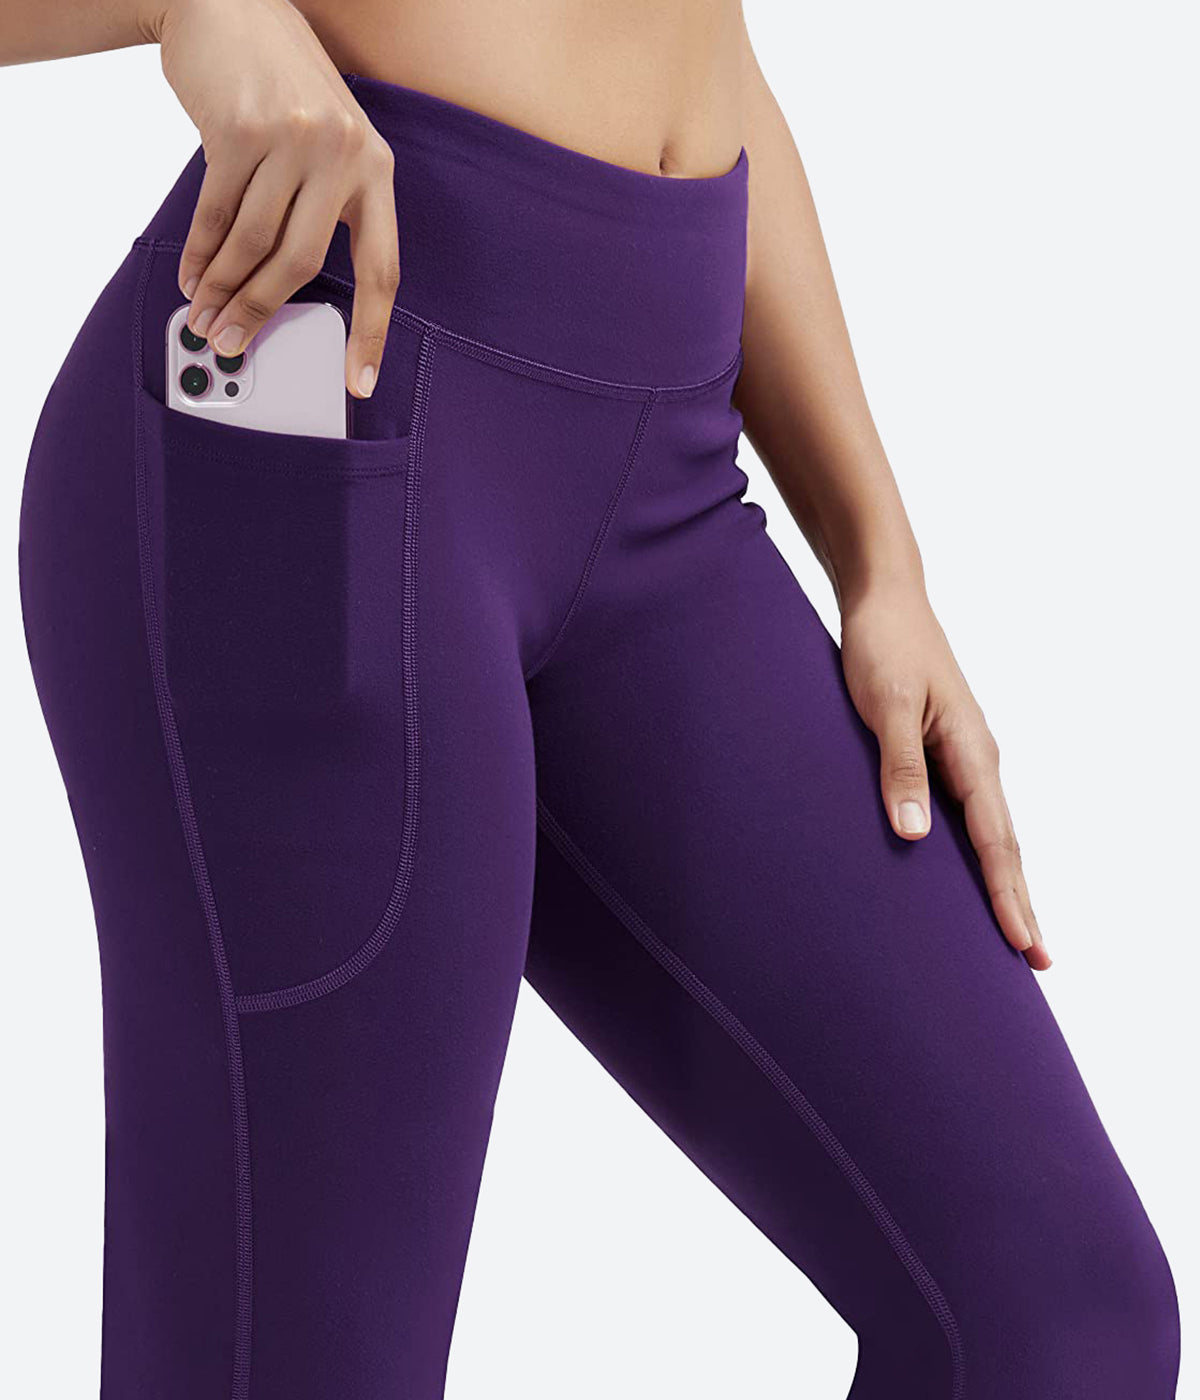 Heathyoga Capri Pants for Women Bootcut Capri Yoga Pants with Pockets